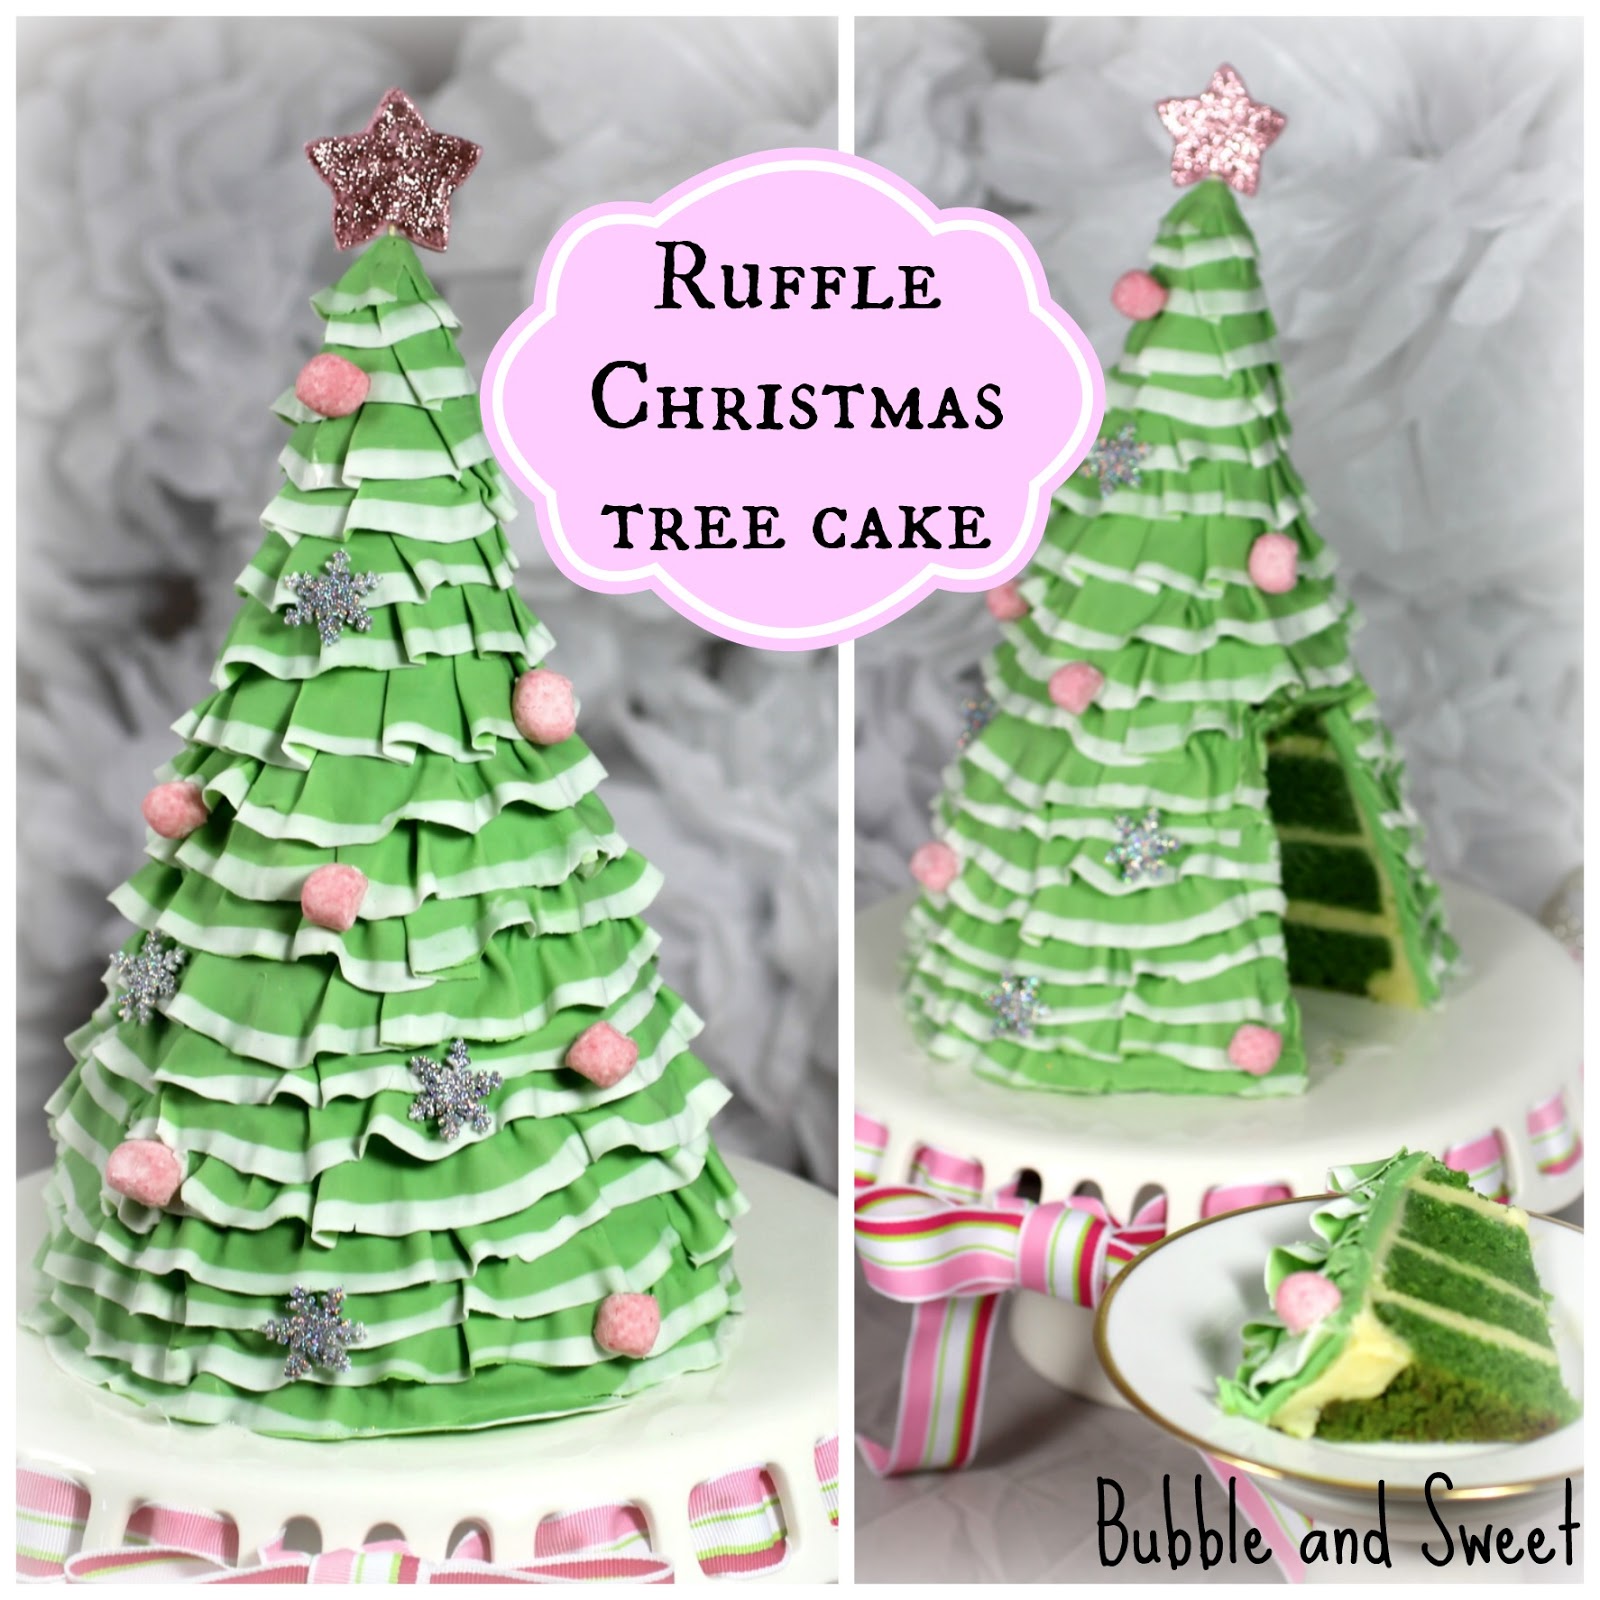 3D+Christmas+Tree+Cake+ruffle+christmas+tree+cake+bubble+and+sweet.jpg